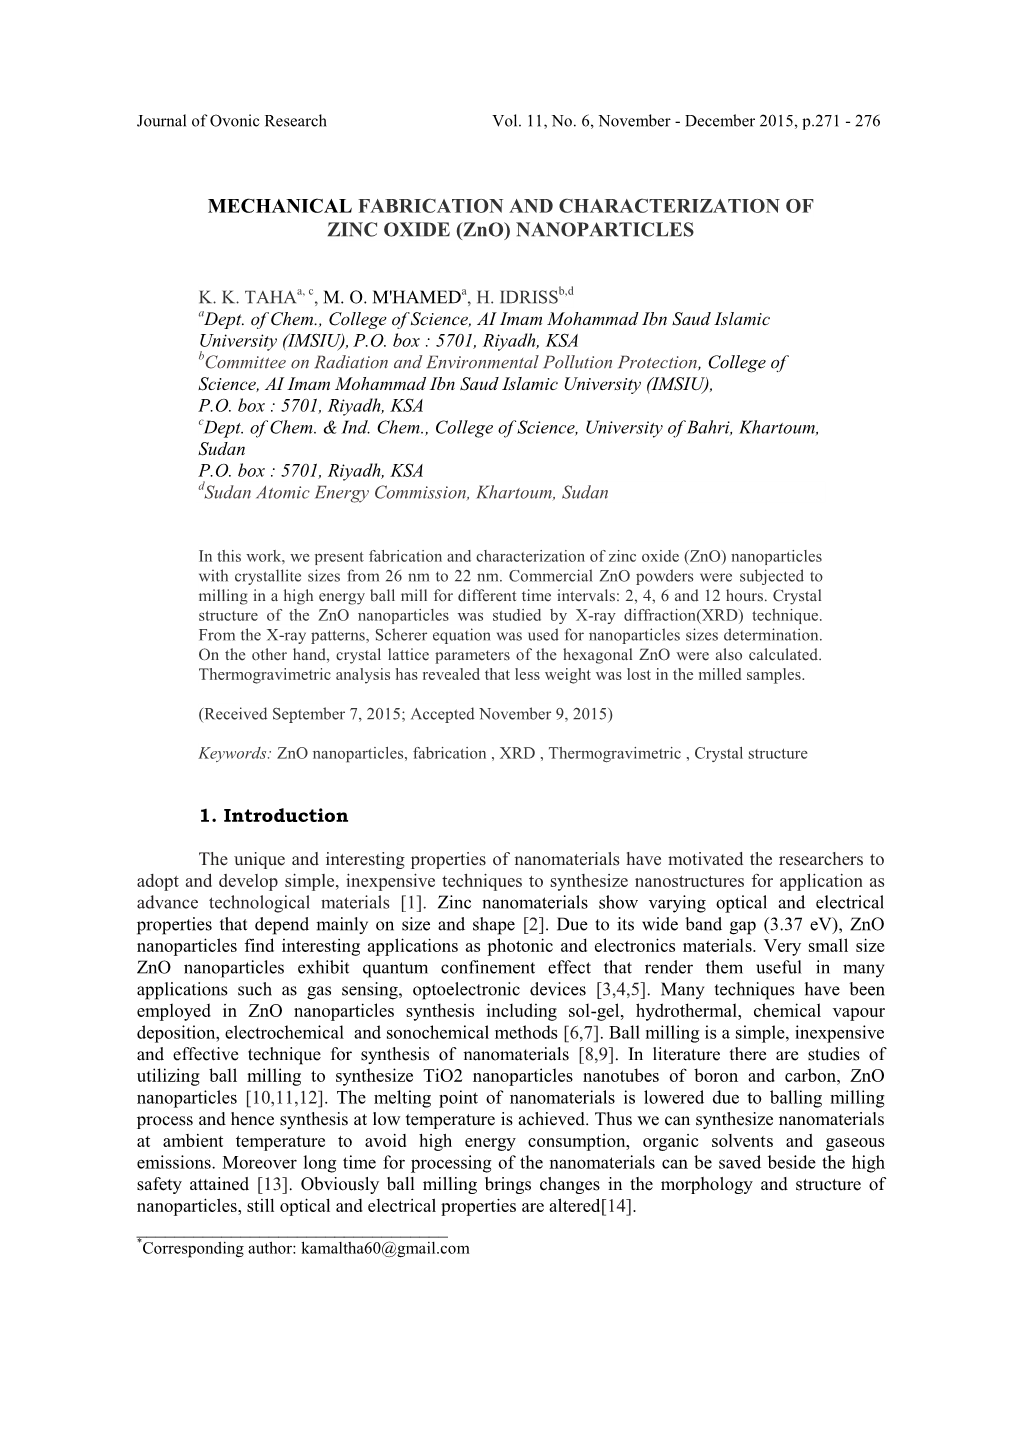 MECHANICAL FABRICATION and CHARACTERIZATION of ZINC OXIDE (Zno) NANOPARTICLES